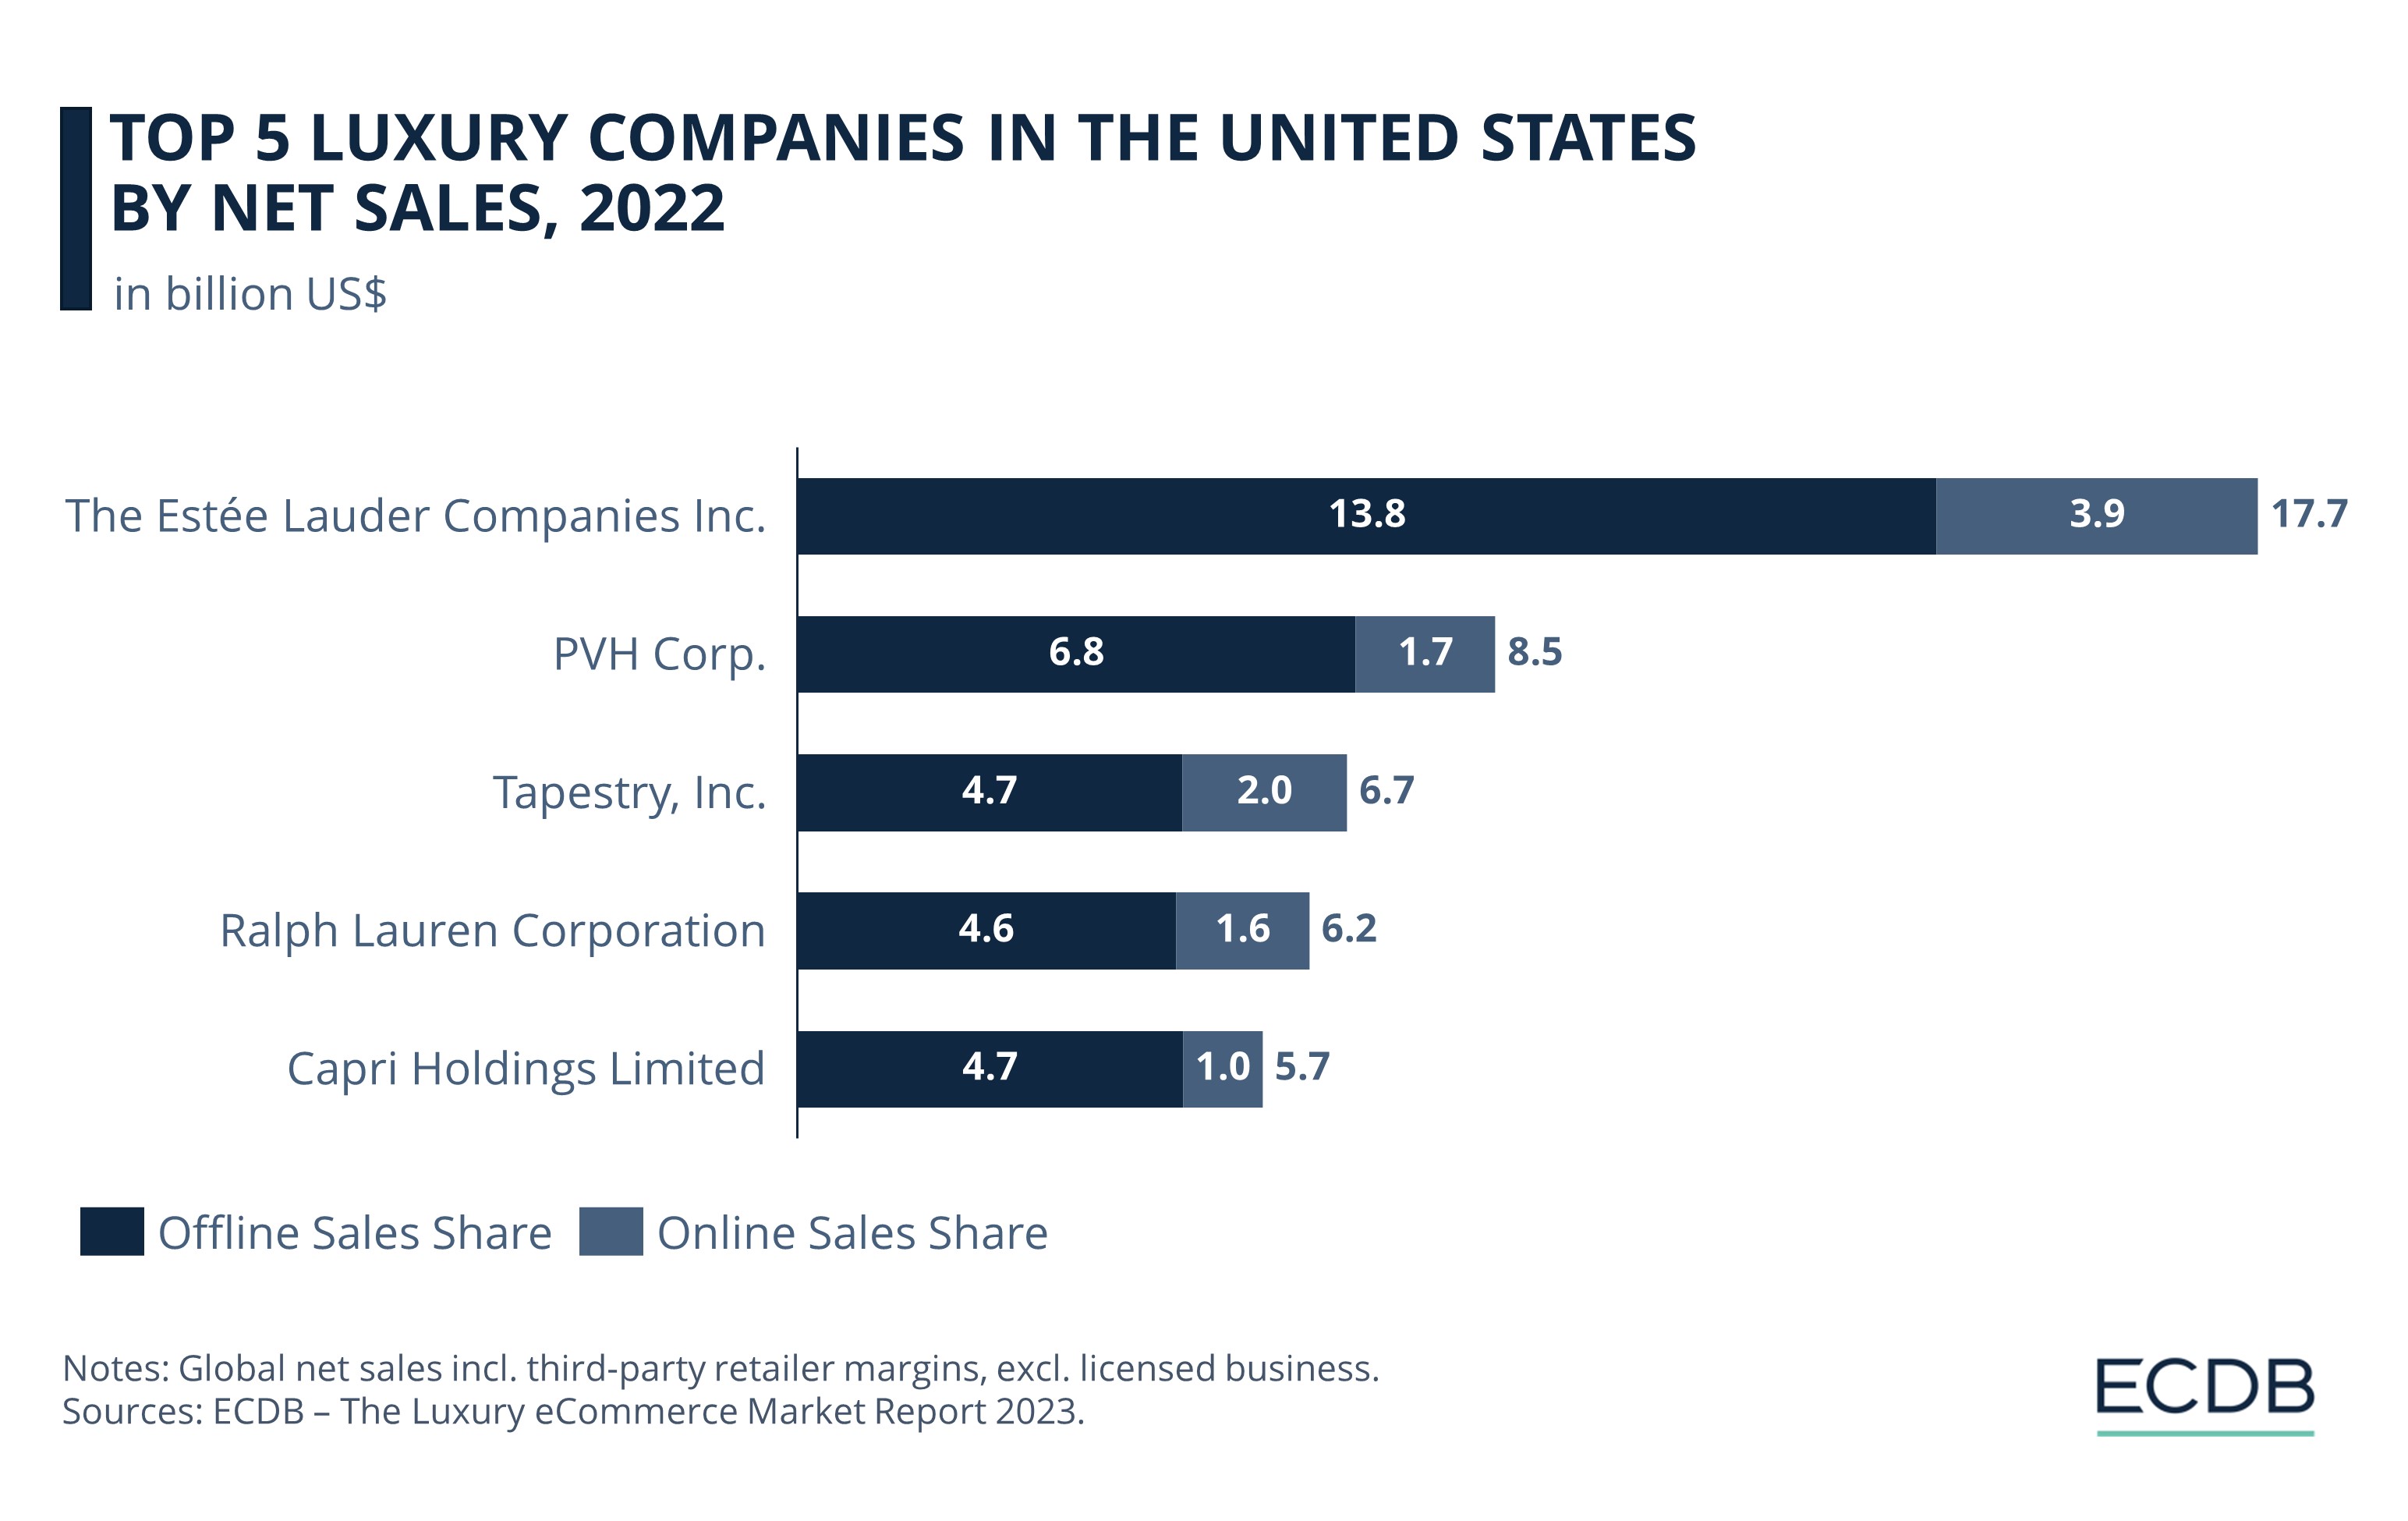 U.S. Luxury Goods Market: Top 5 Companies by Online Net Sales